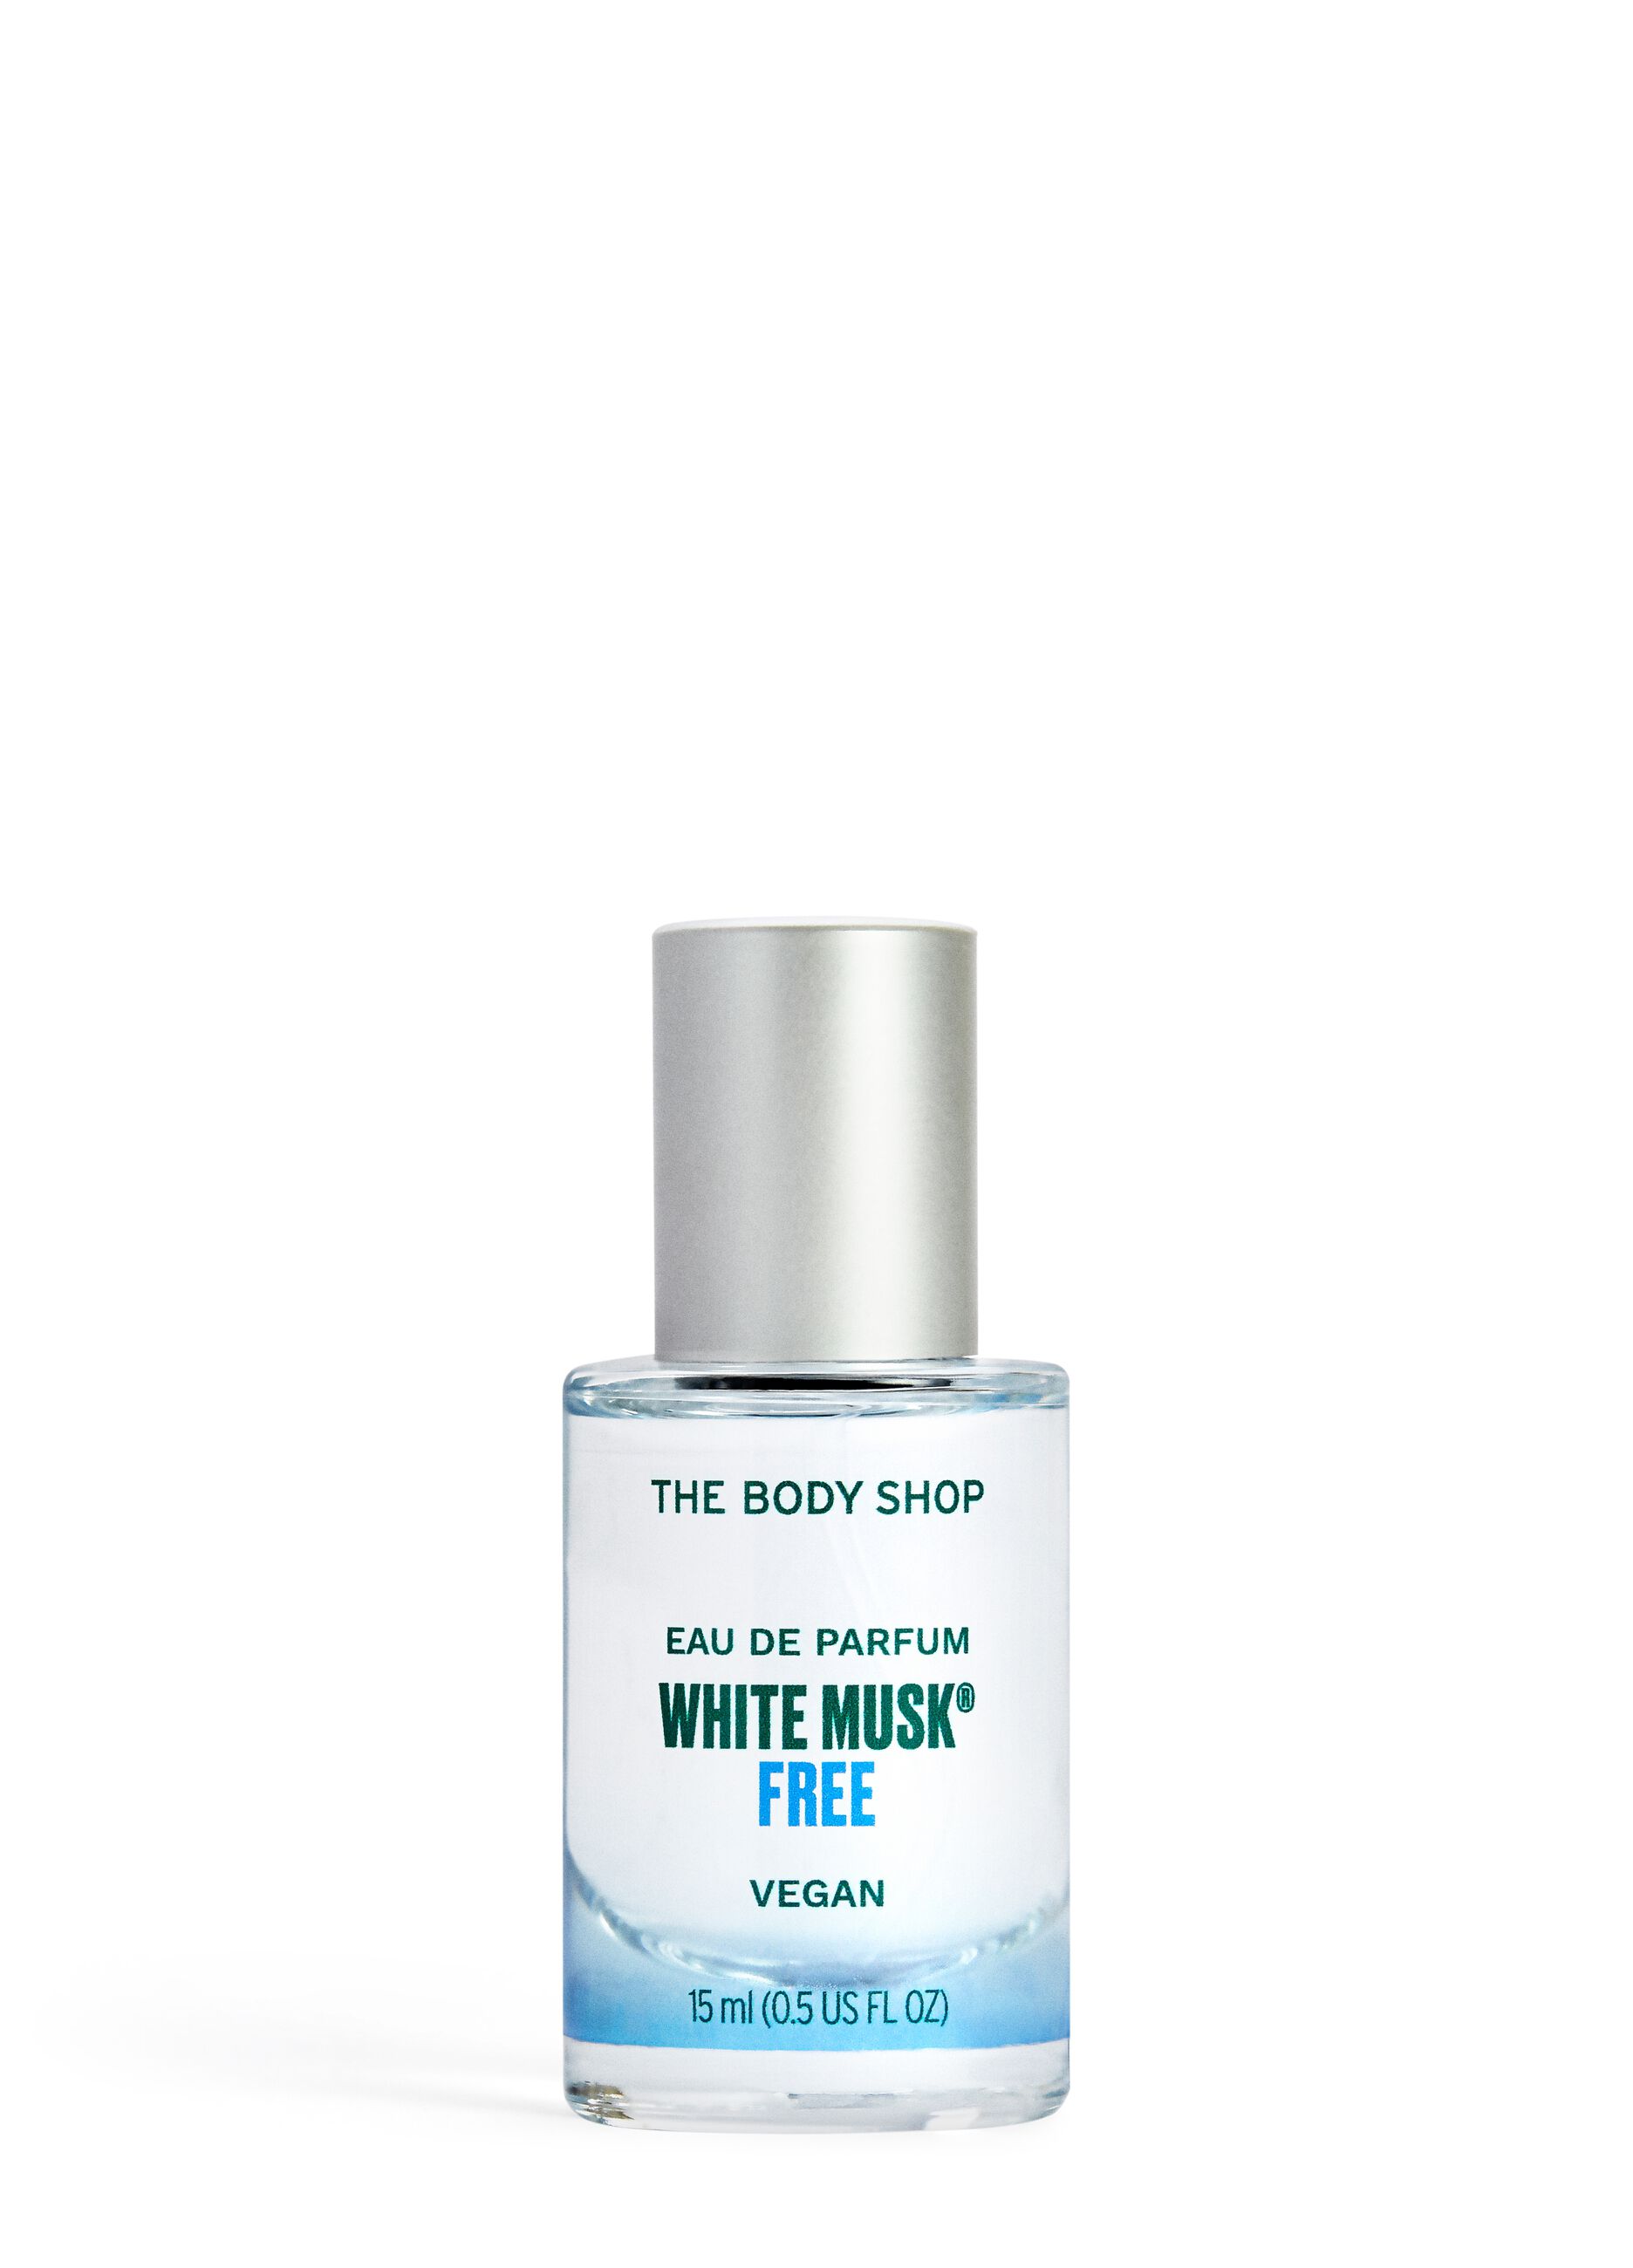 Agua de perfume White Musk® Free 15ml The Body Shop